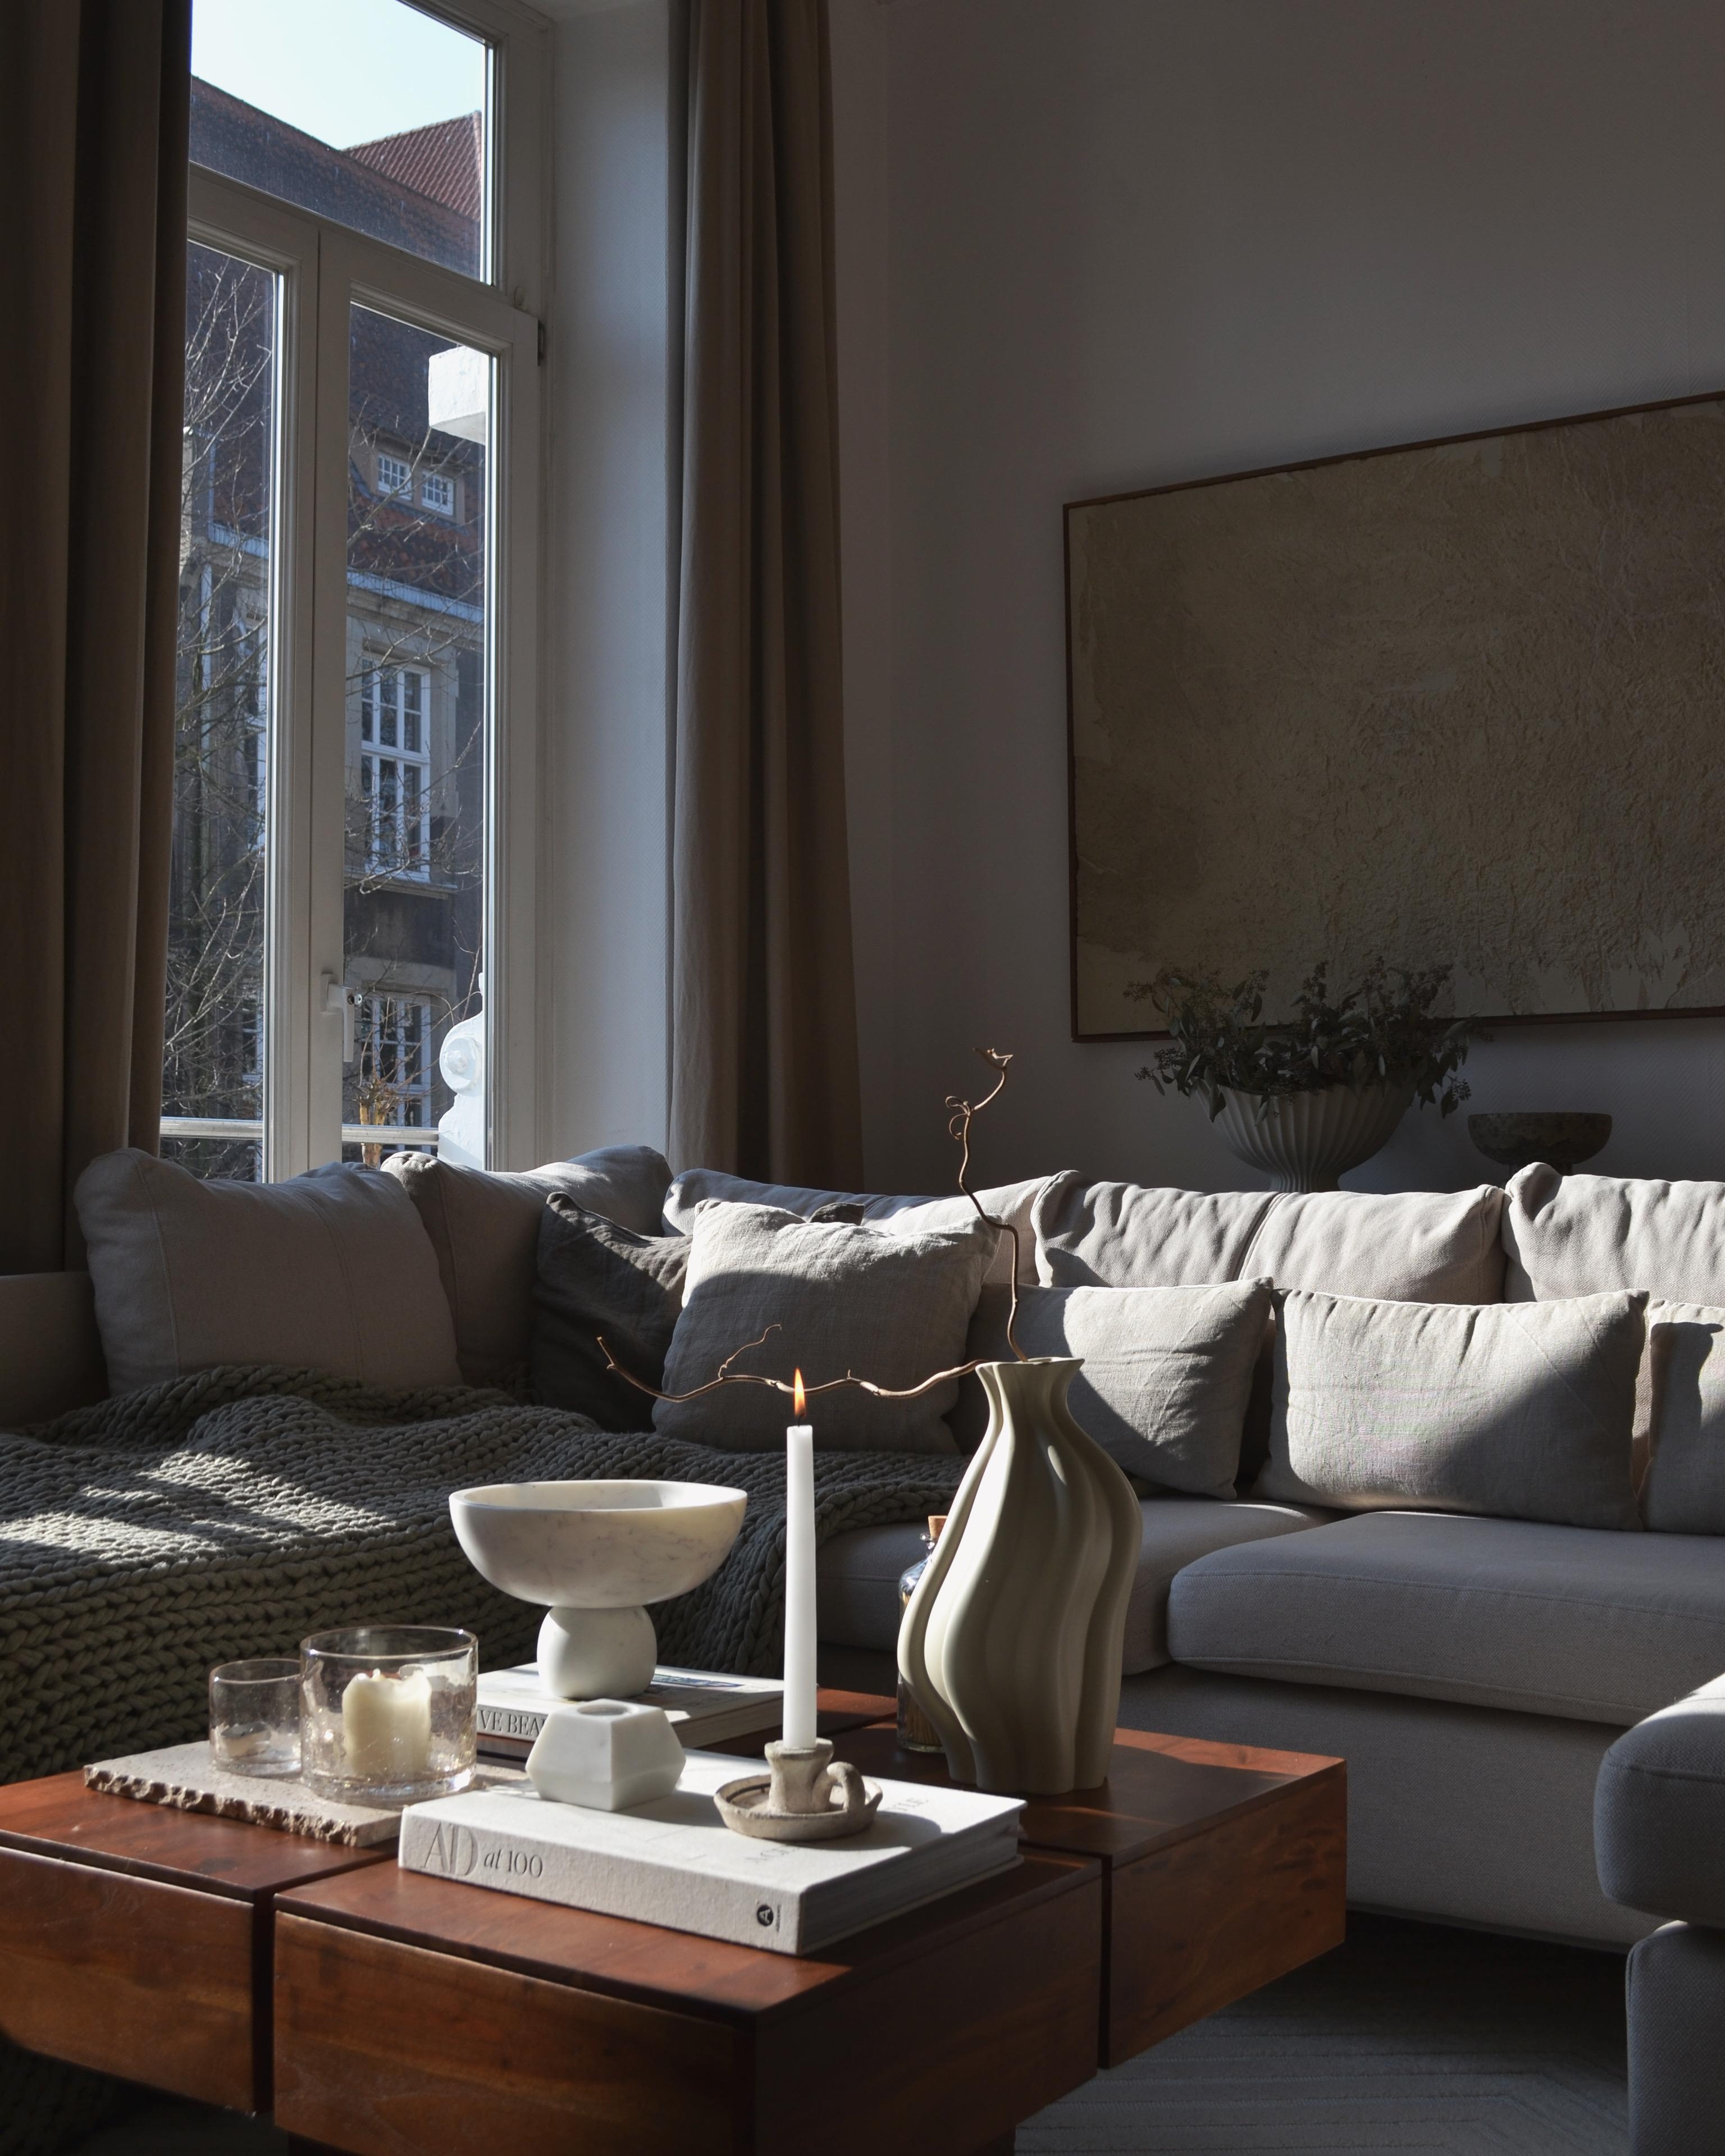 Lieblingsplätzchen
#livingroom #homeinspiration #altbauwohnung